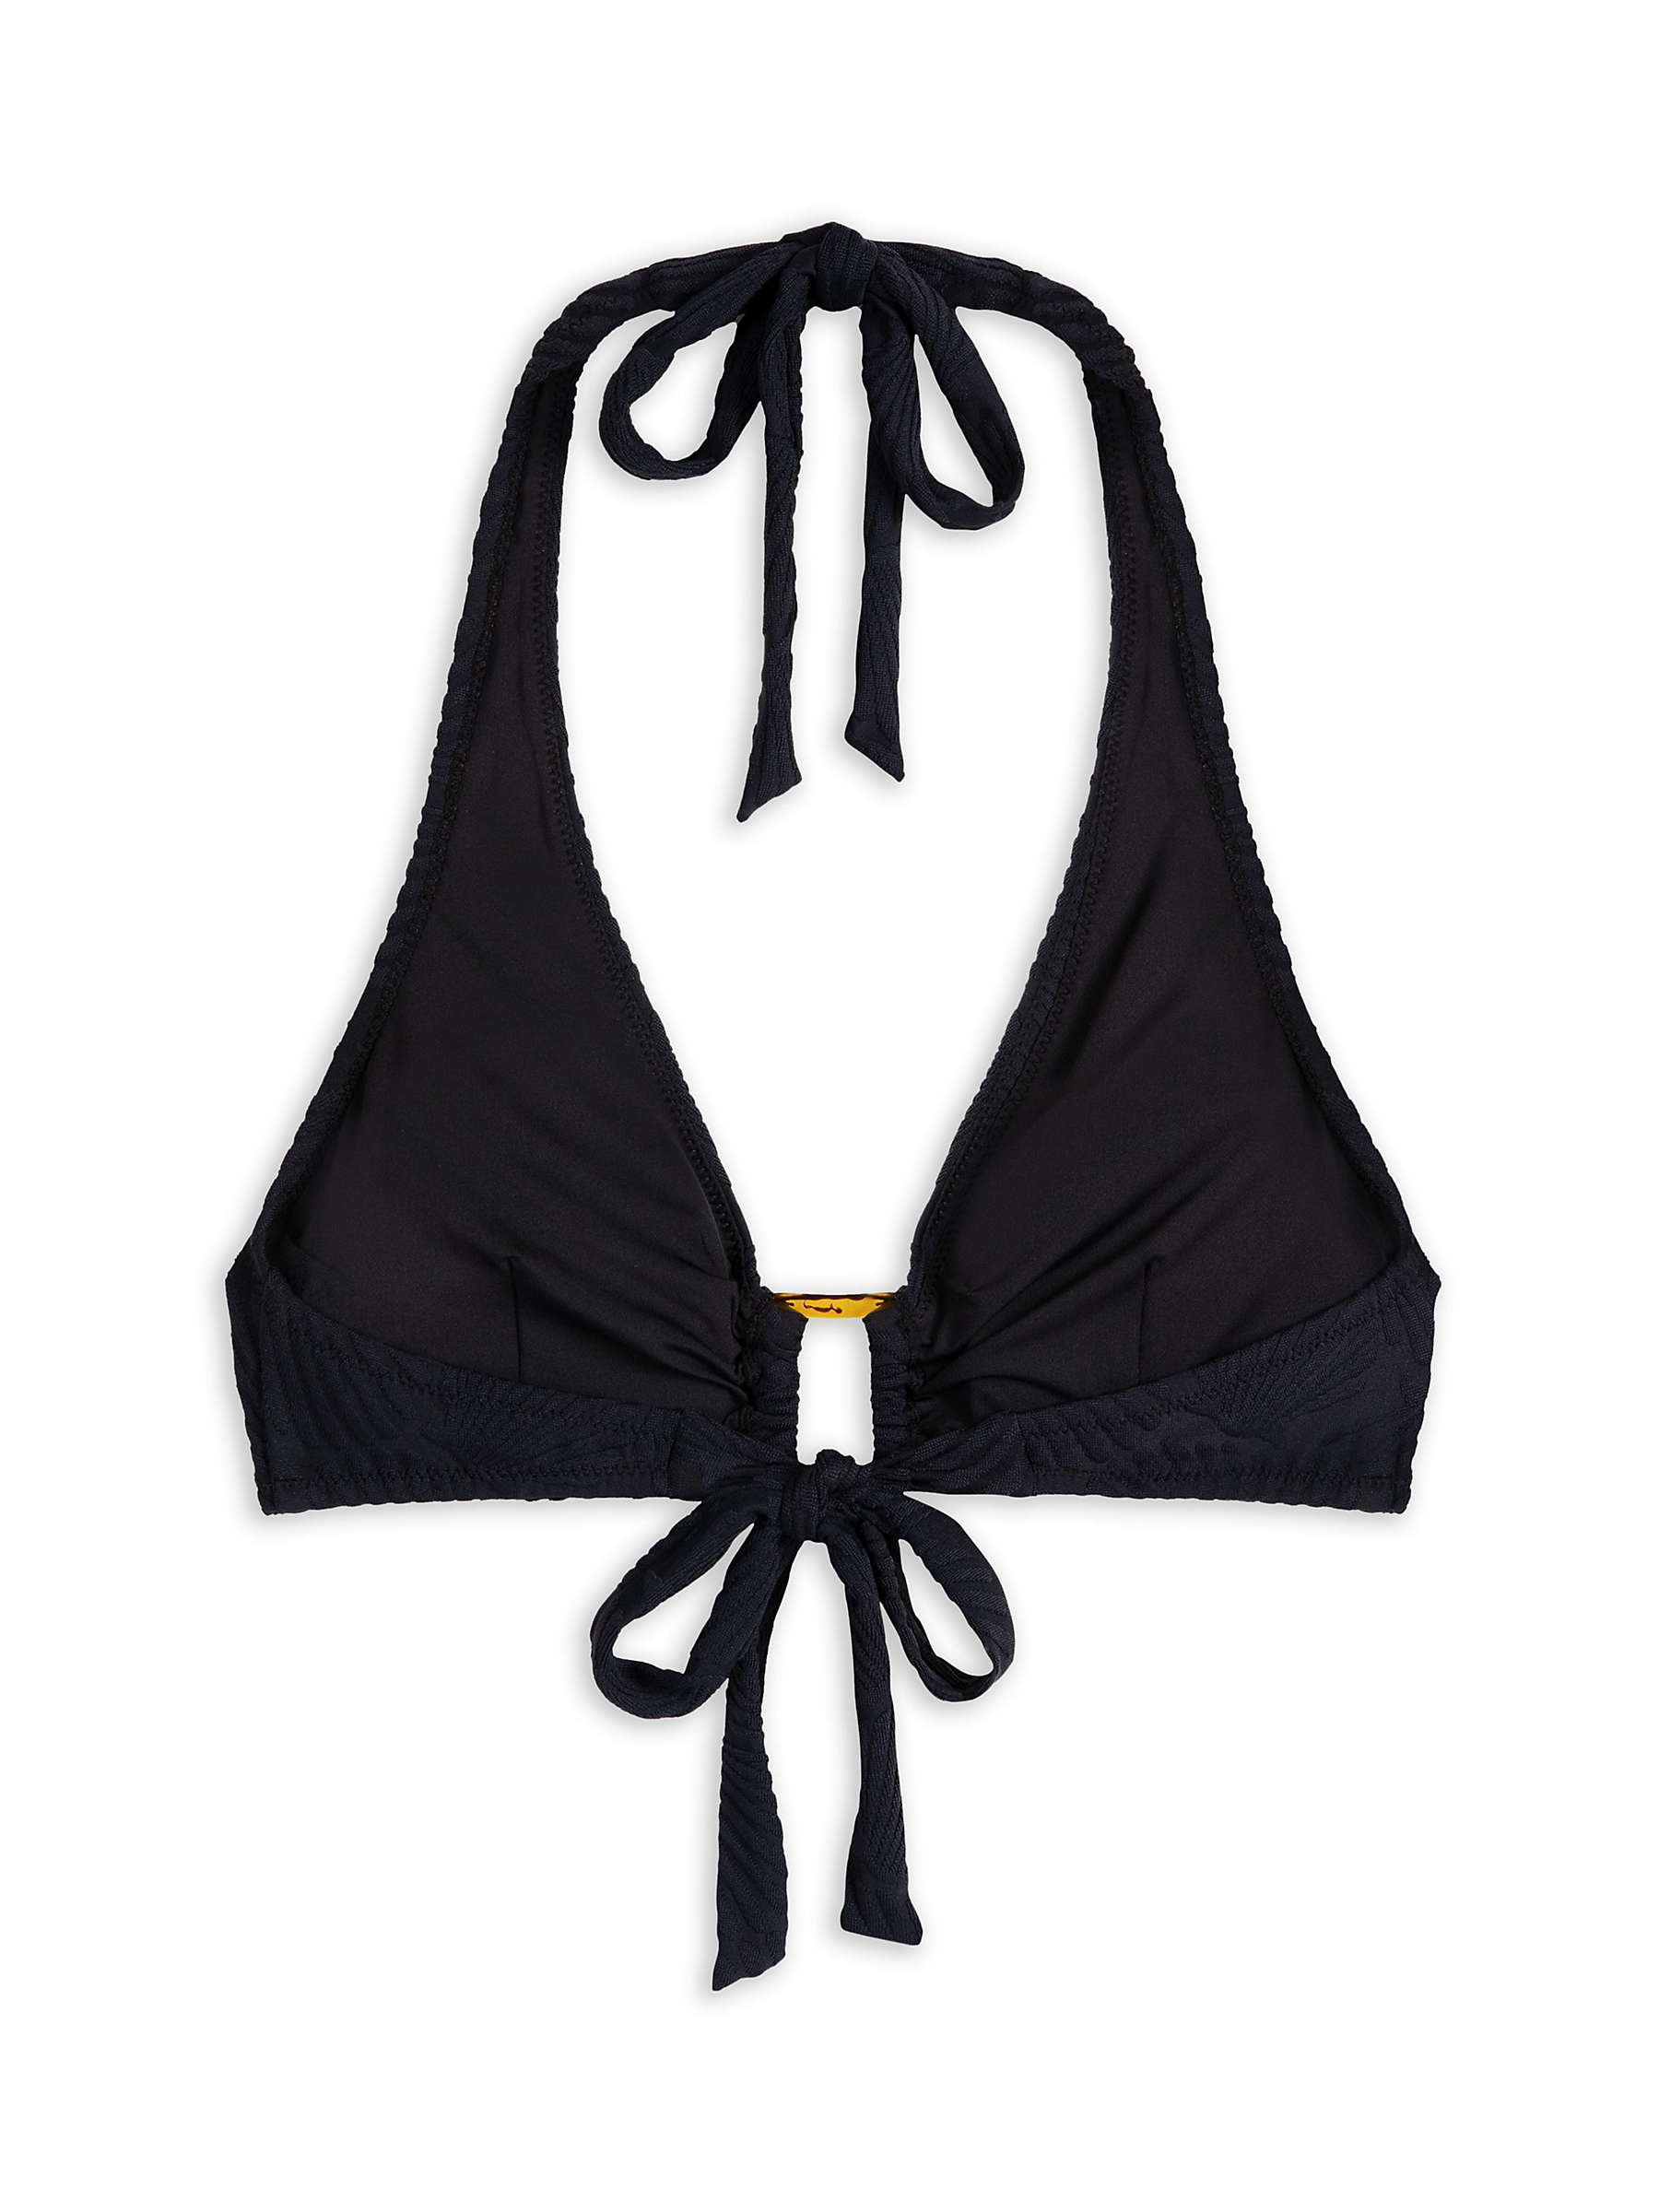 Buy Chelsea Peers Jacquard Shell Halterneck Bikini Top, Black Online at johnlewis.com